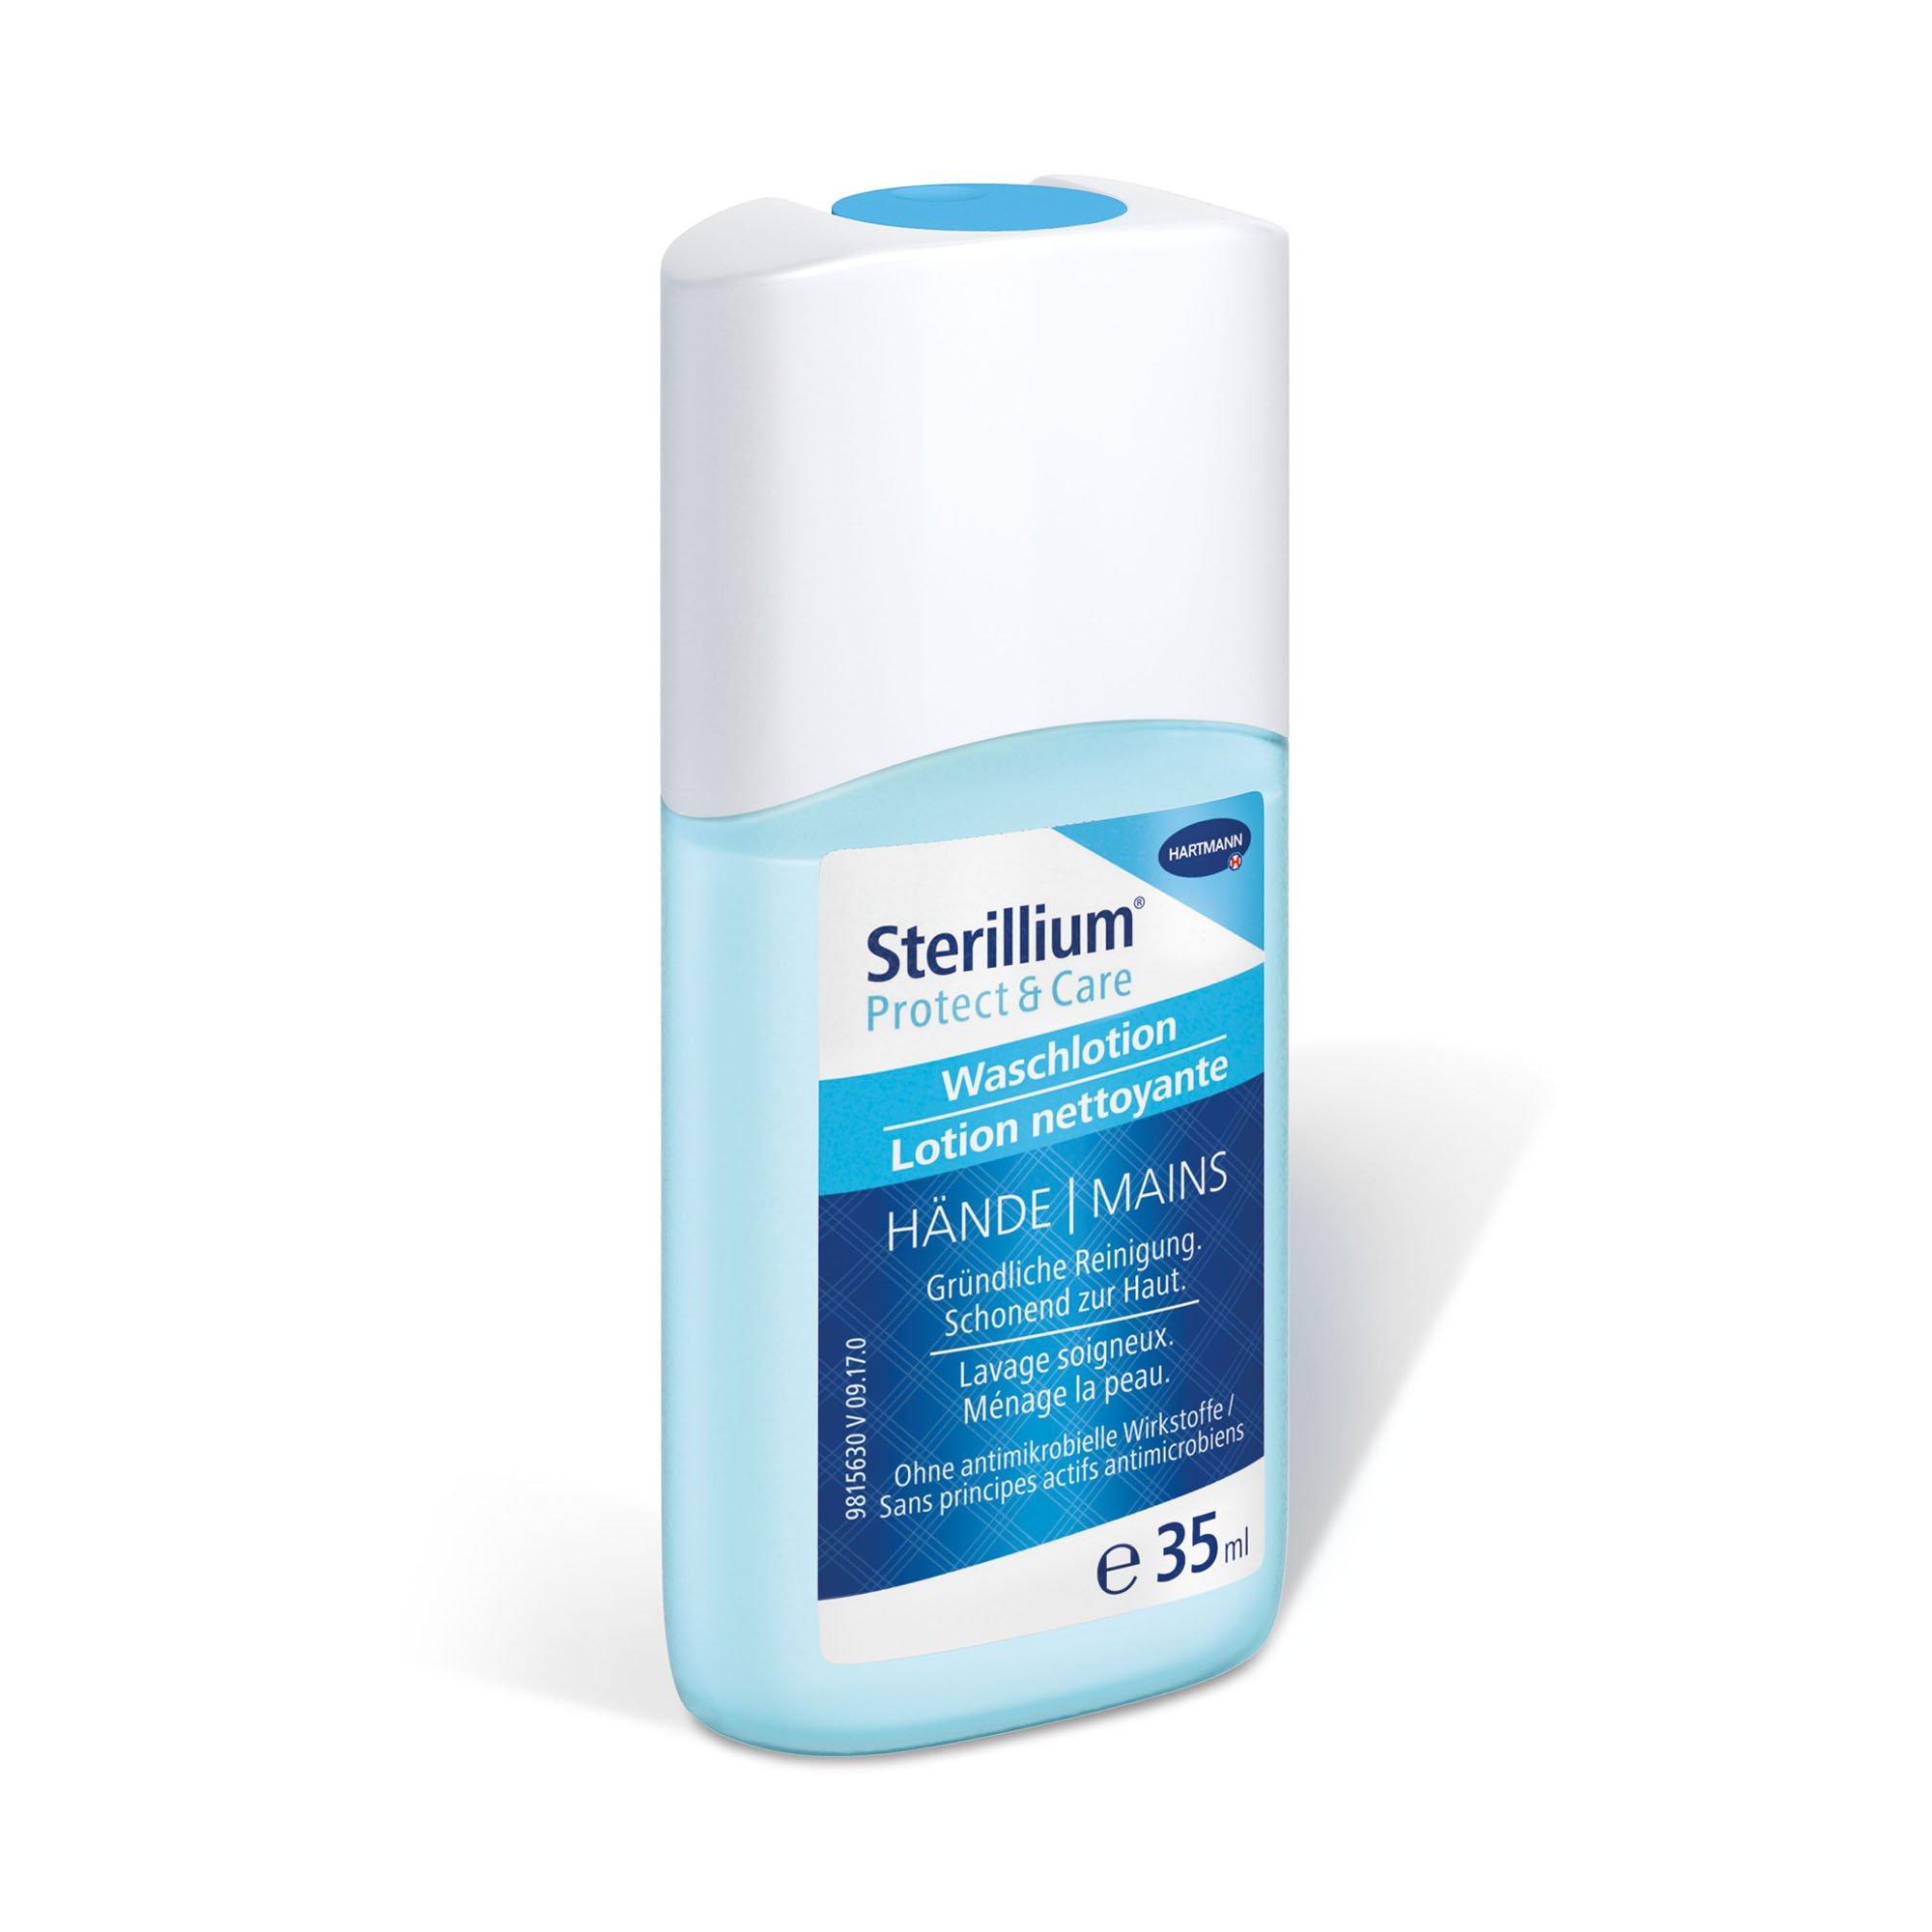 Image of Sterillium Protect & Care Handwaschlotion - 35ml